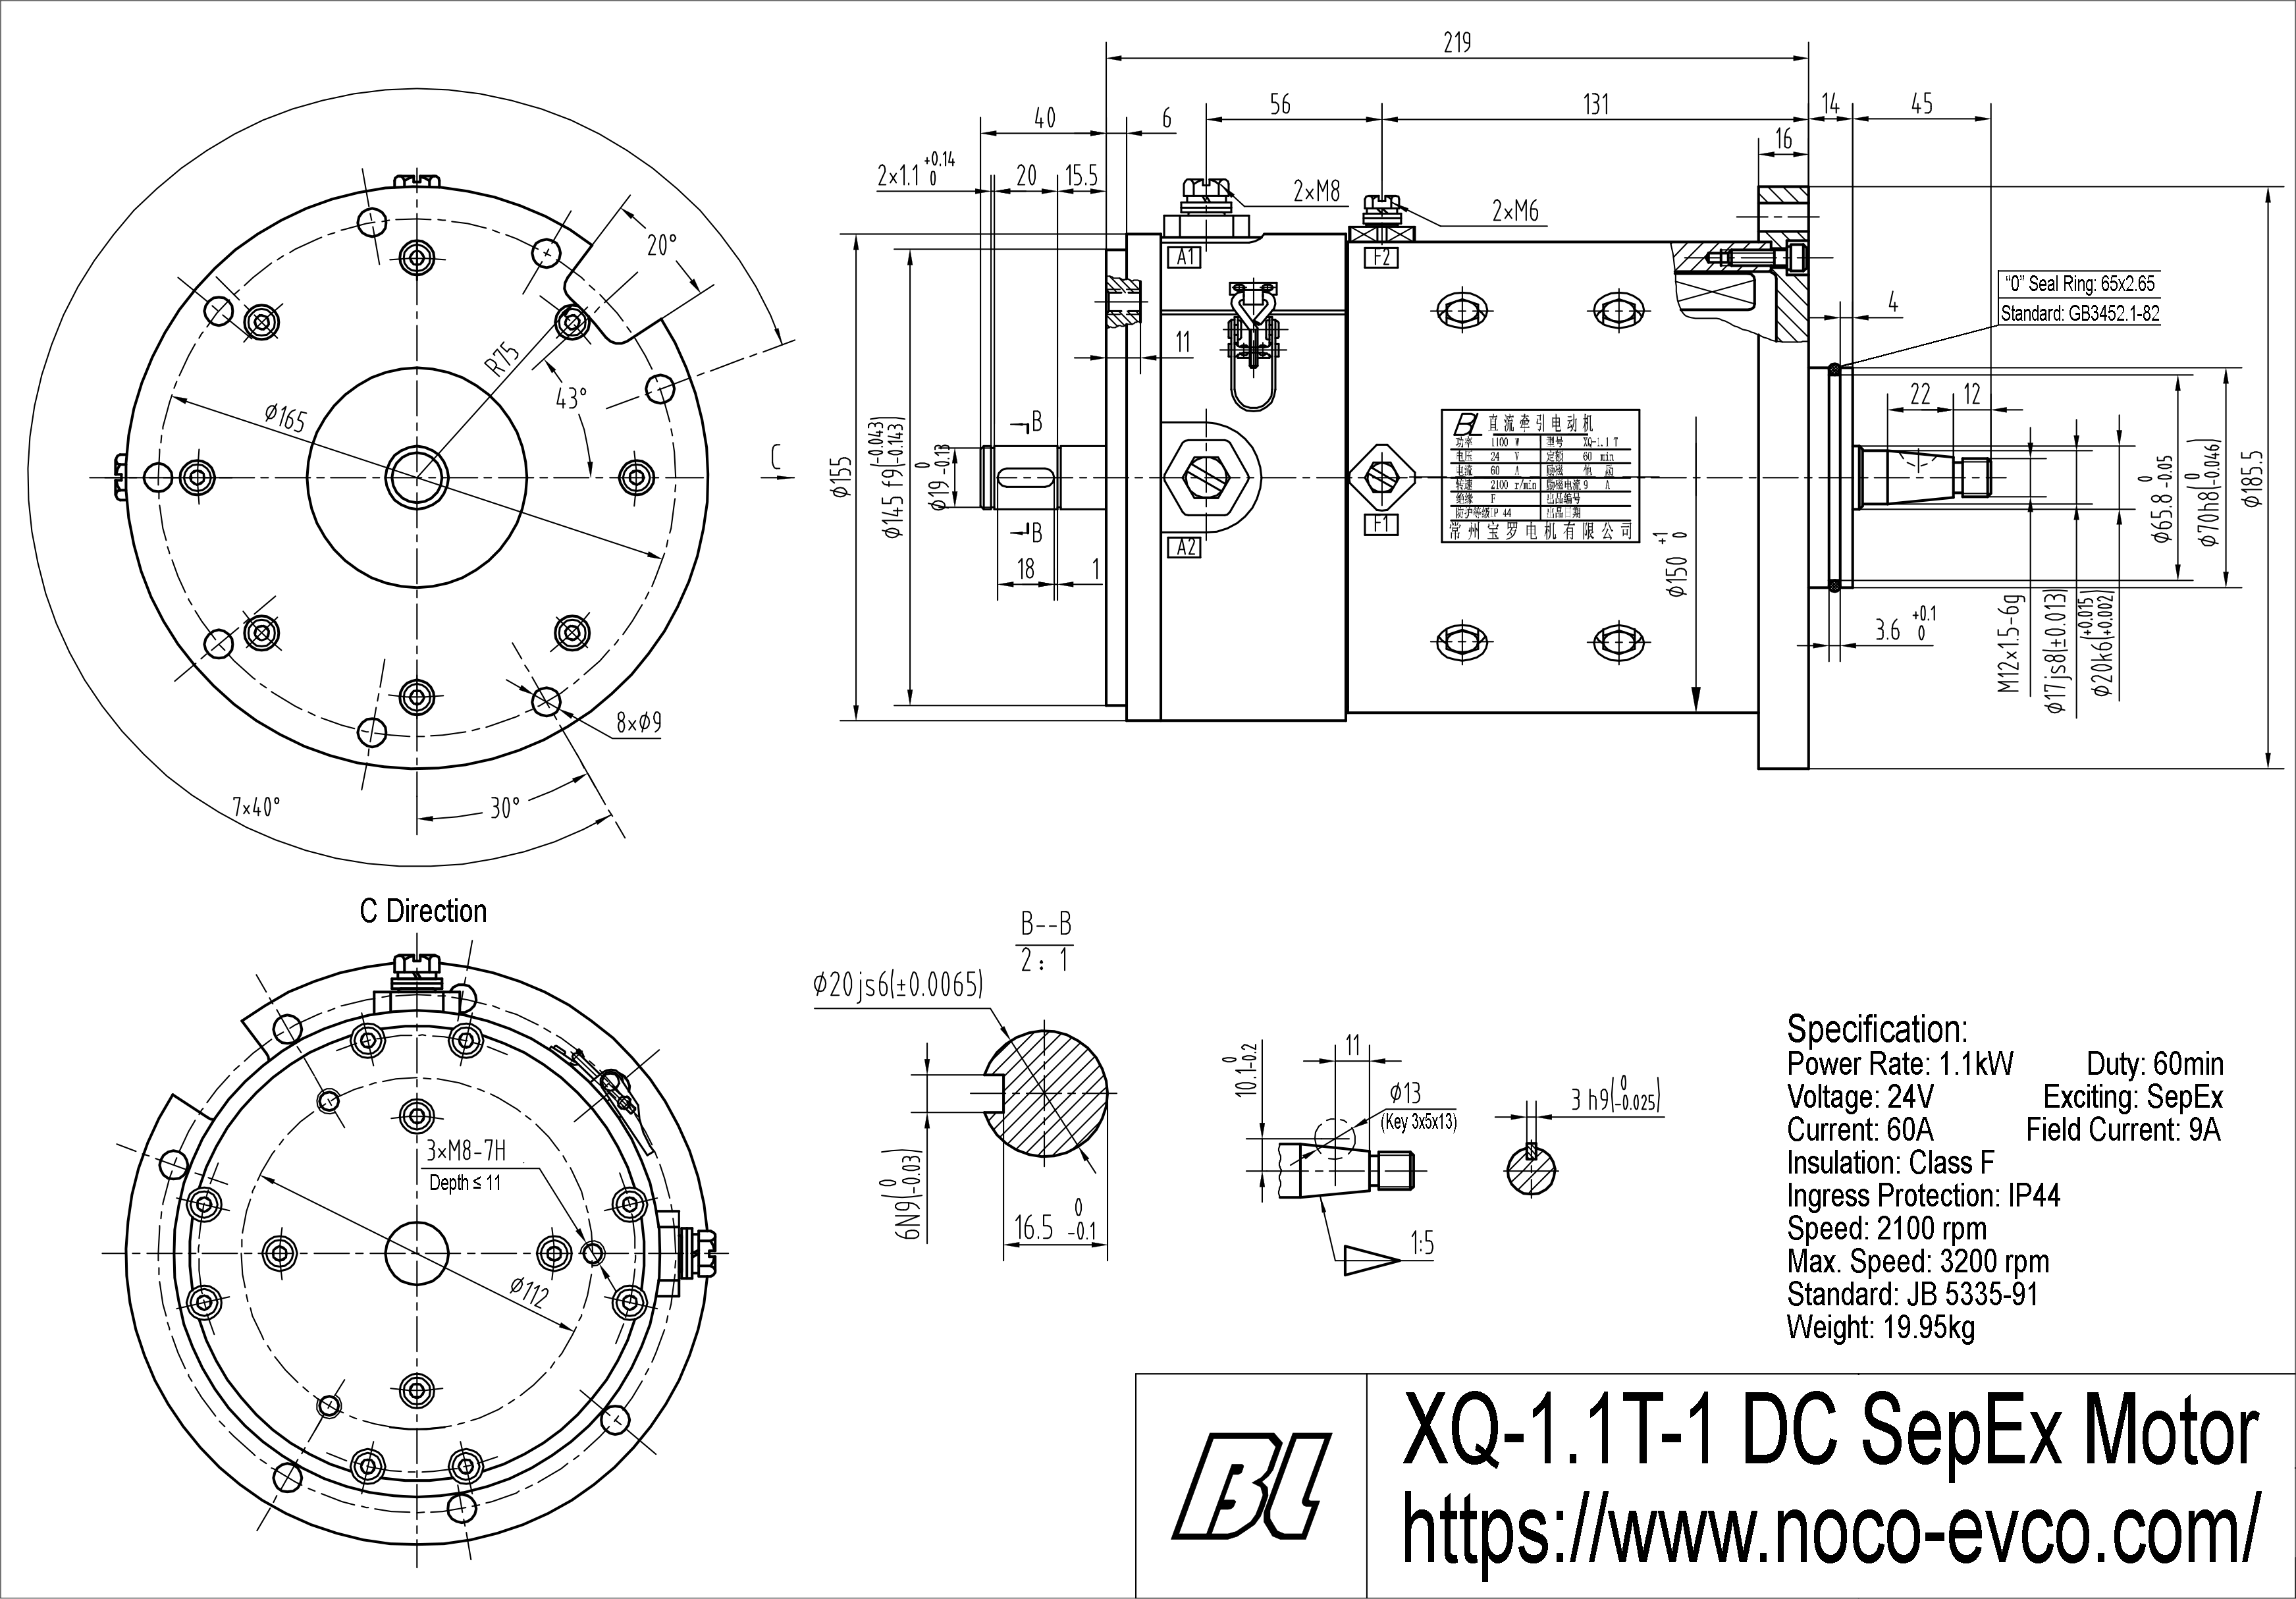 DC SepEx Motor (Shunt Wire Type), Model XQ-1.1T-1, Outline Diagram